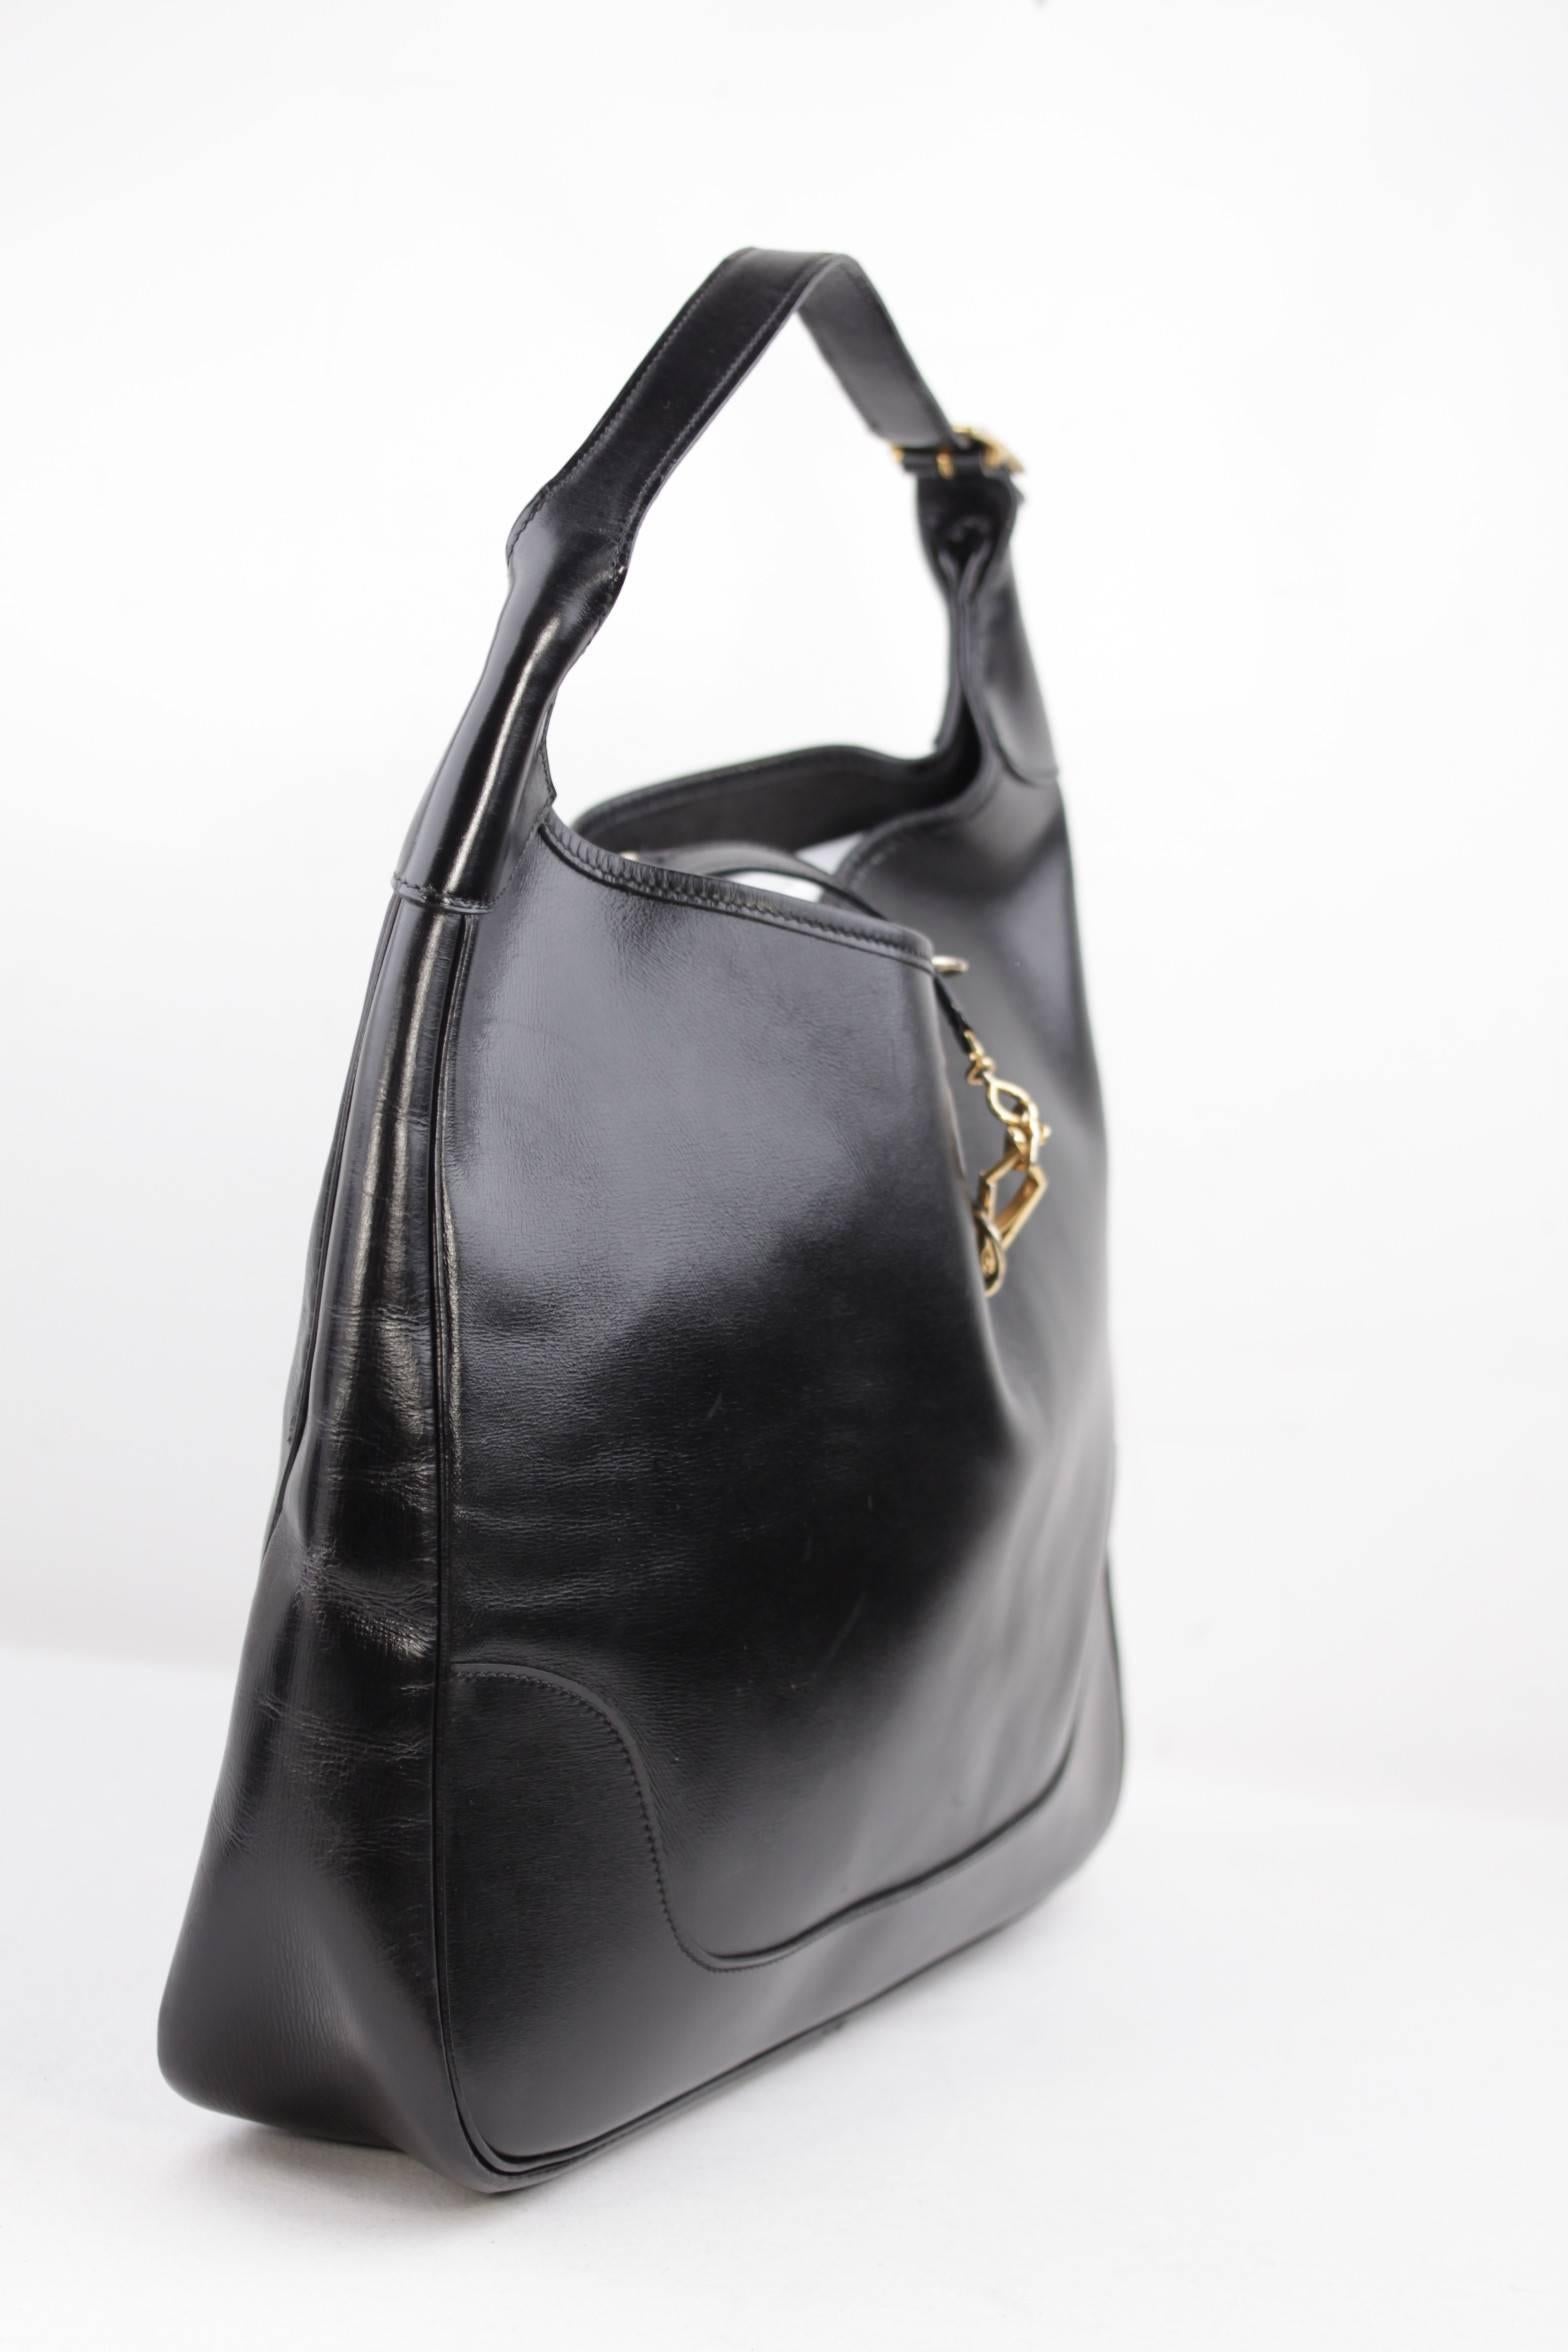 HERMES PARIS Vintage Black Leather TRIM HOBO Tote SHOULDER BAG In Excellent Condition In Rome, Rome